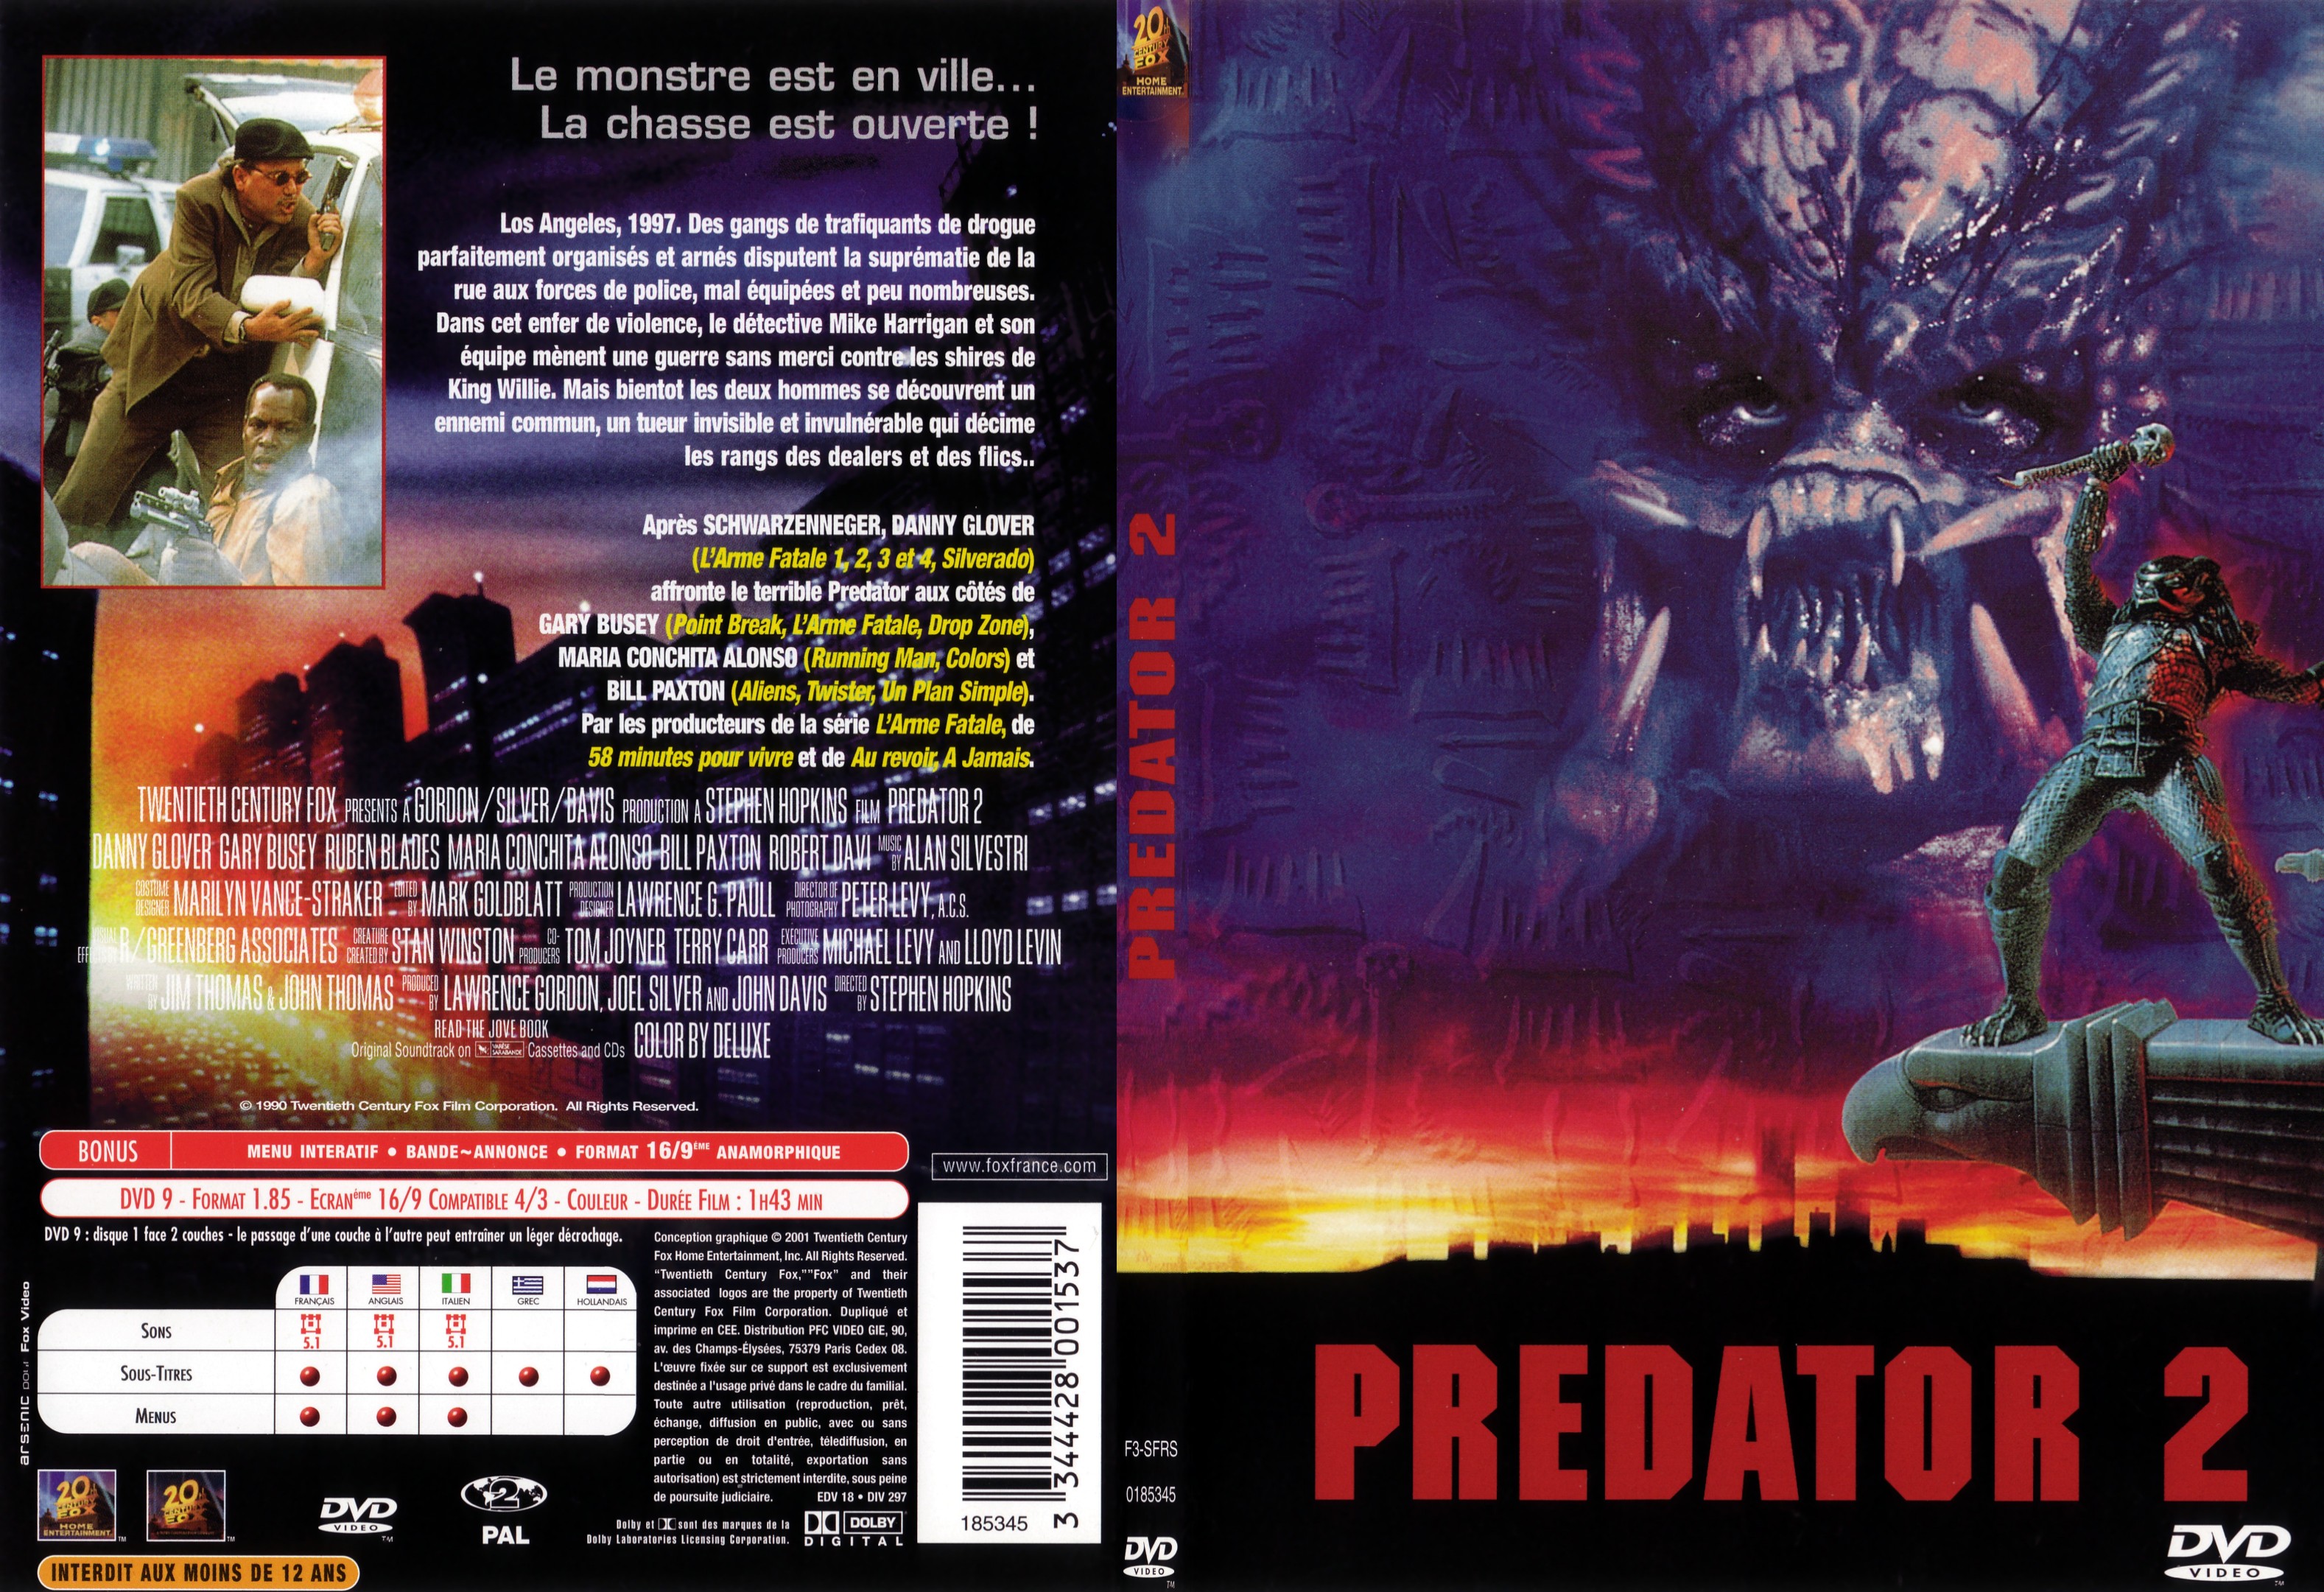 Jaquette DVD Predator 2 - SLIM v2